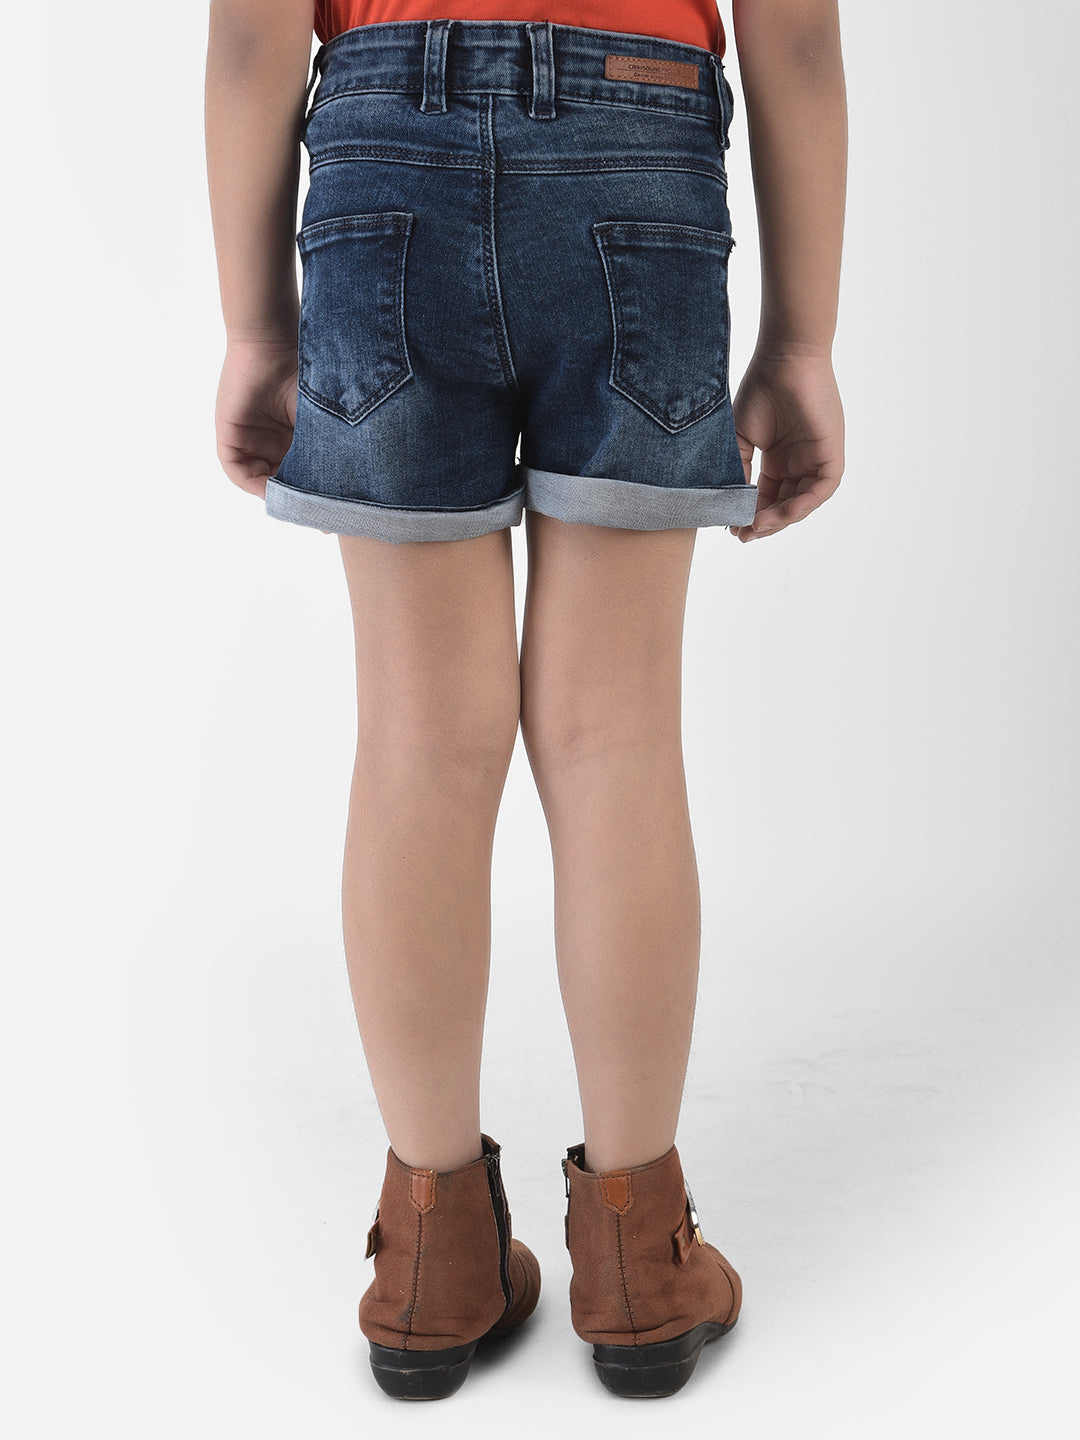 Blue Distressed Shorts - Girls Shorts